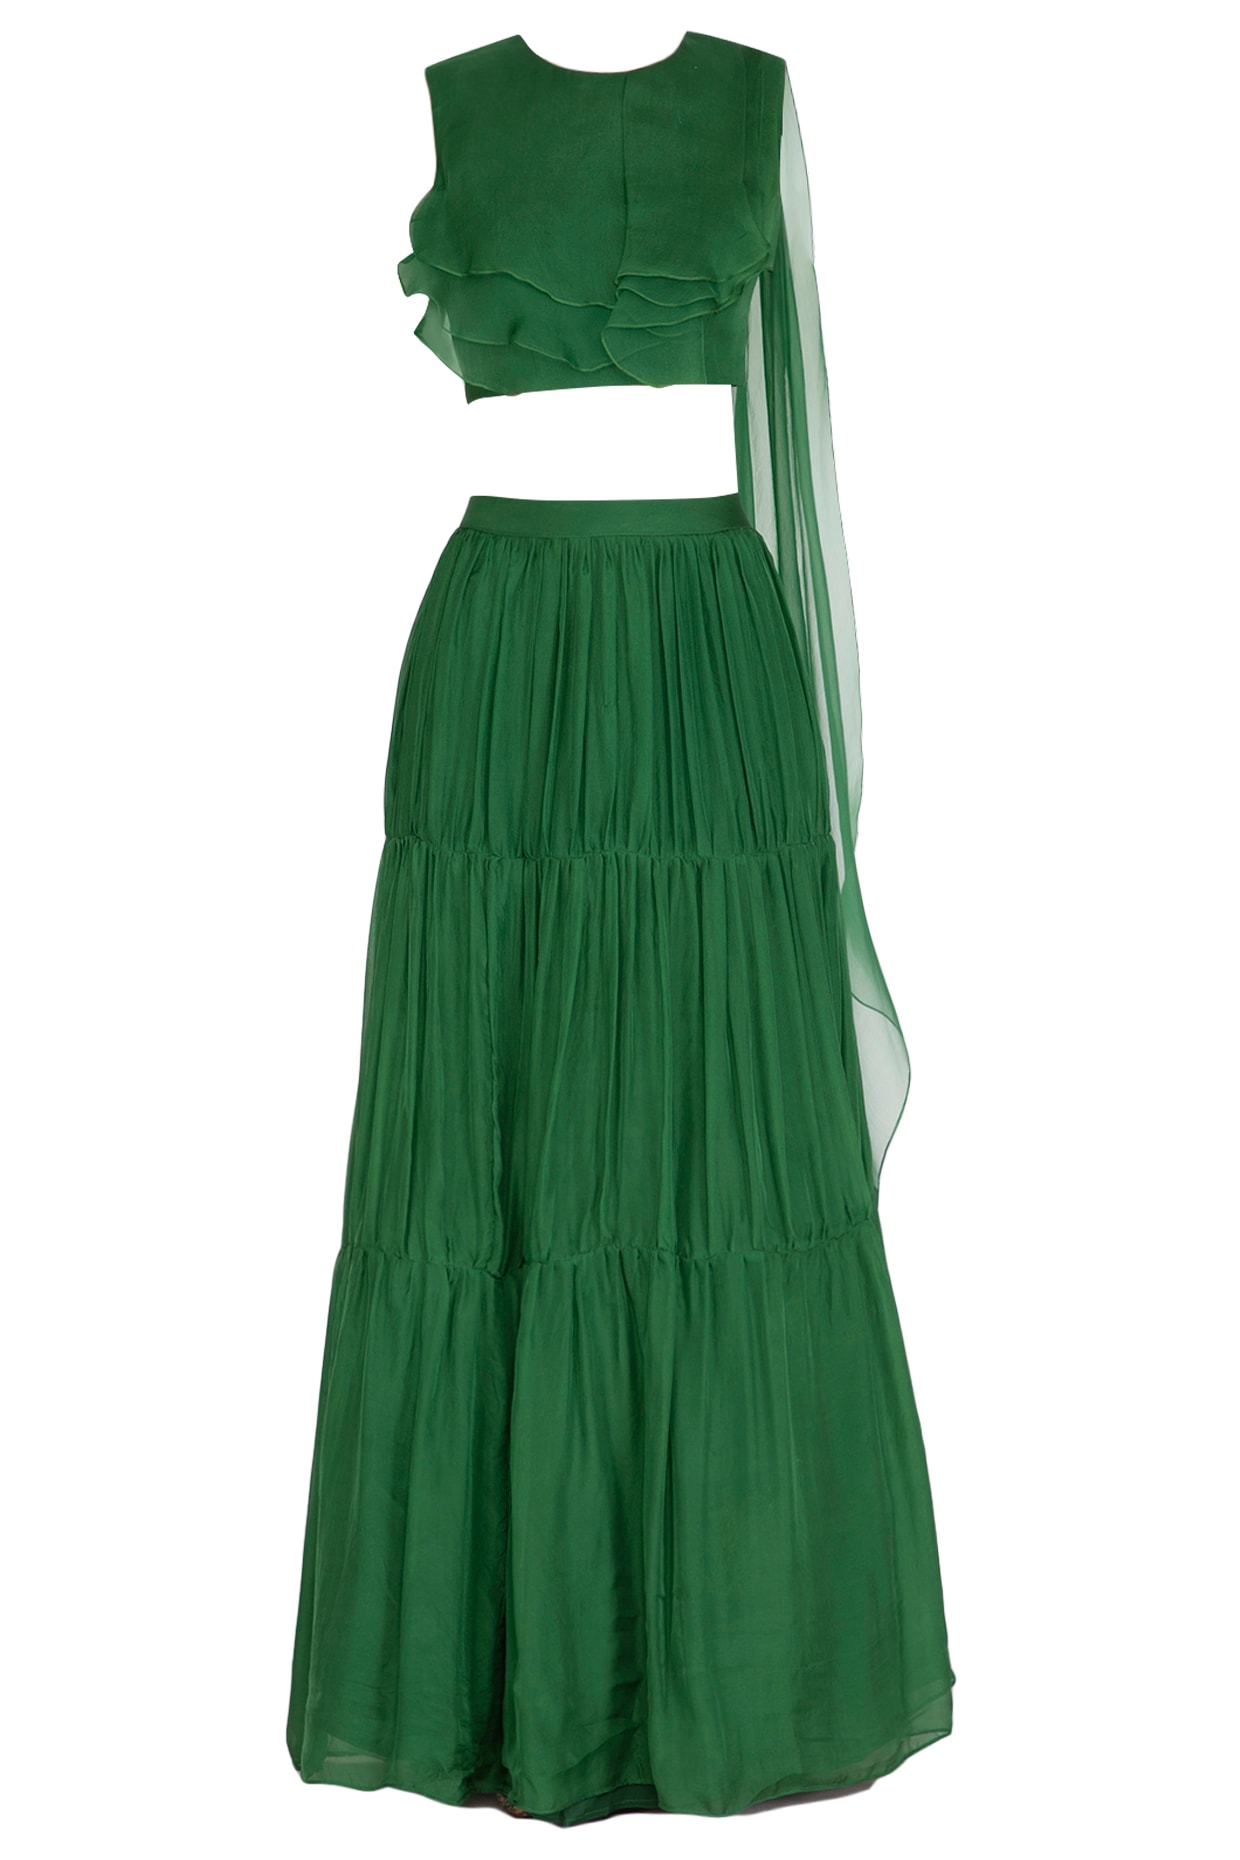 Gotta Work Long Flair Cotton Skirt/Chaniya - GotaSkirt-Green – Banjara India